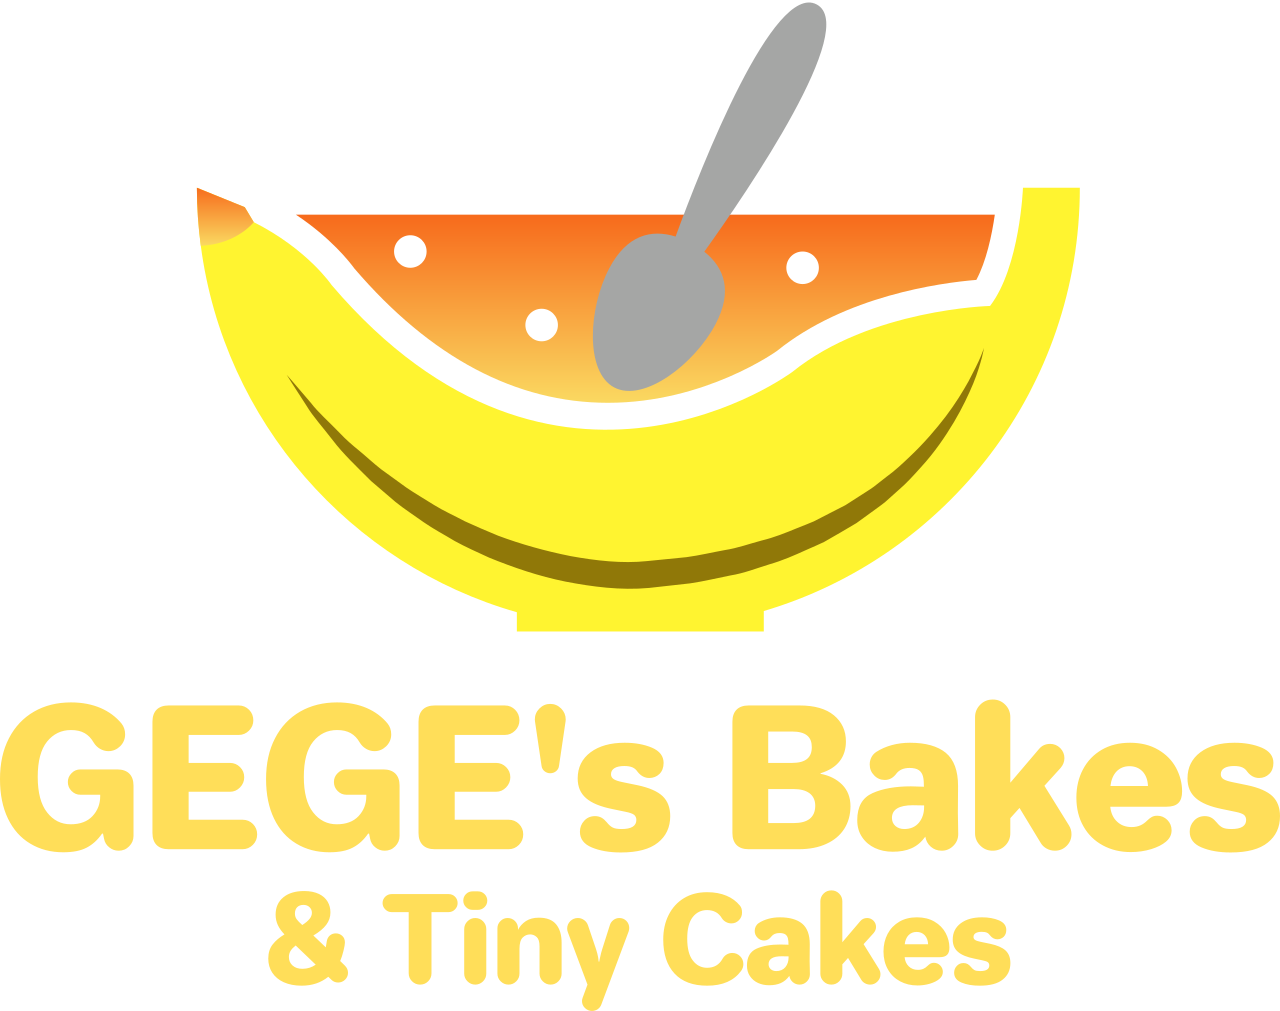 GEGE's Bakes's logo